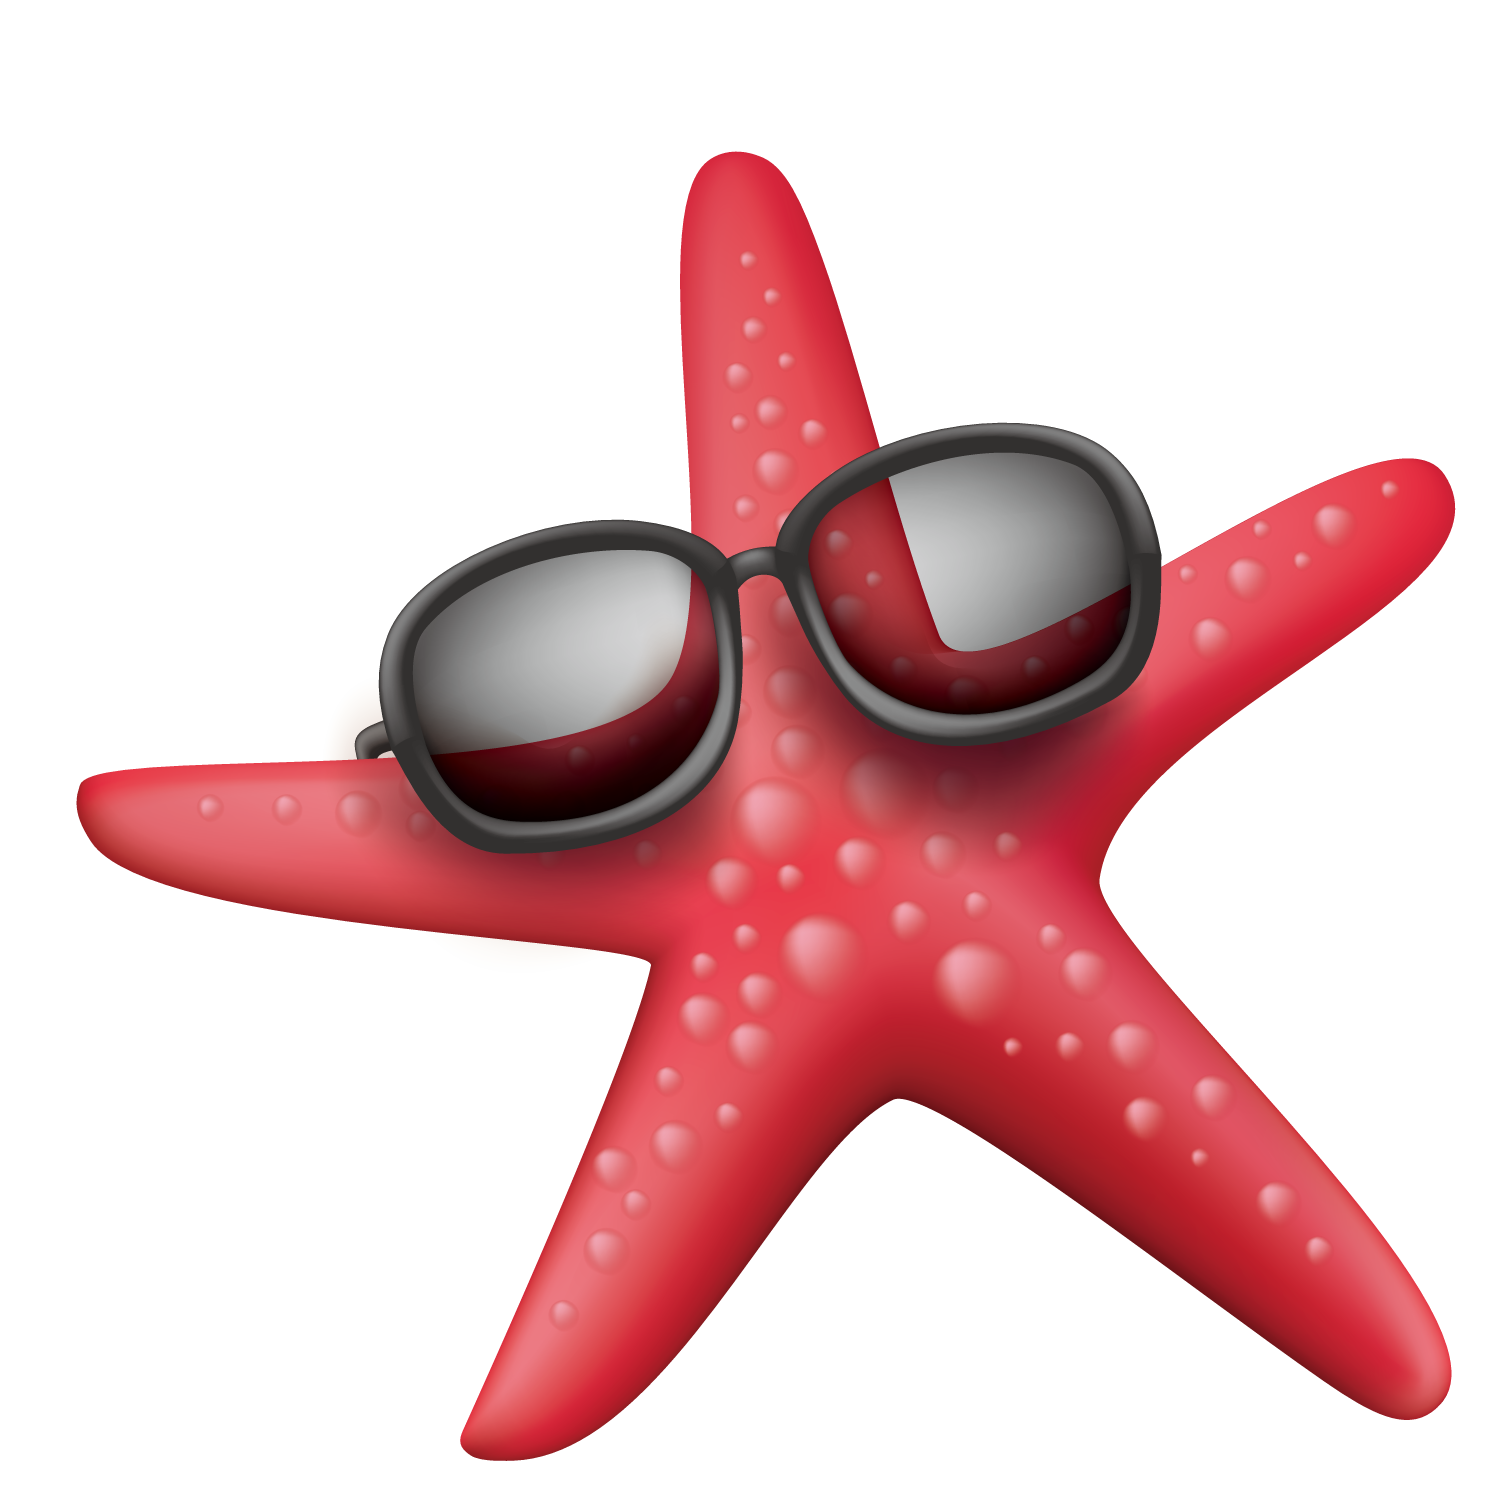 Starfish PNG HD Quality